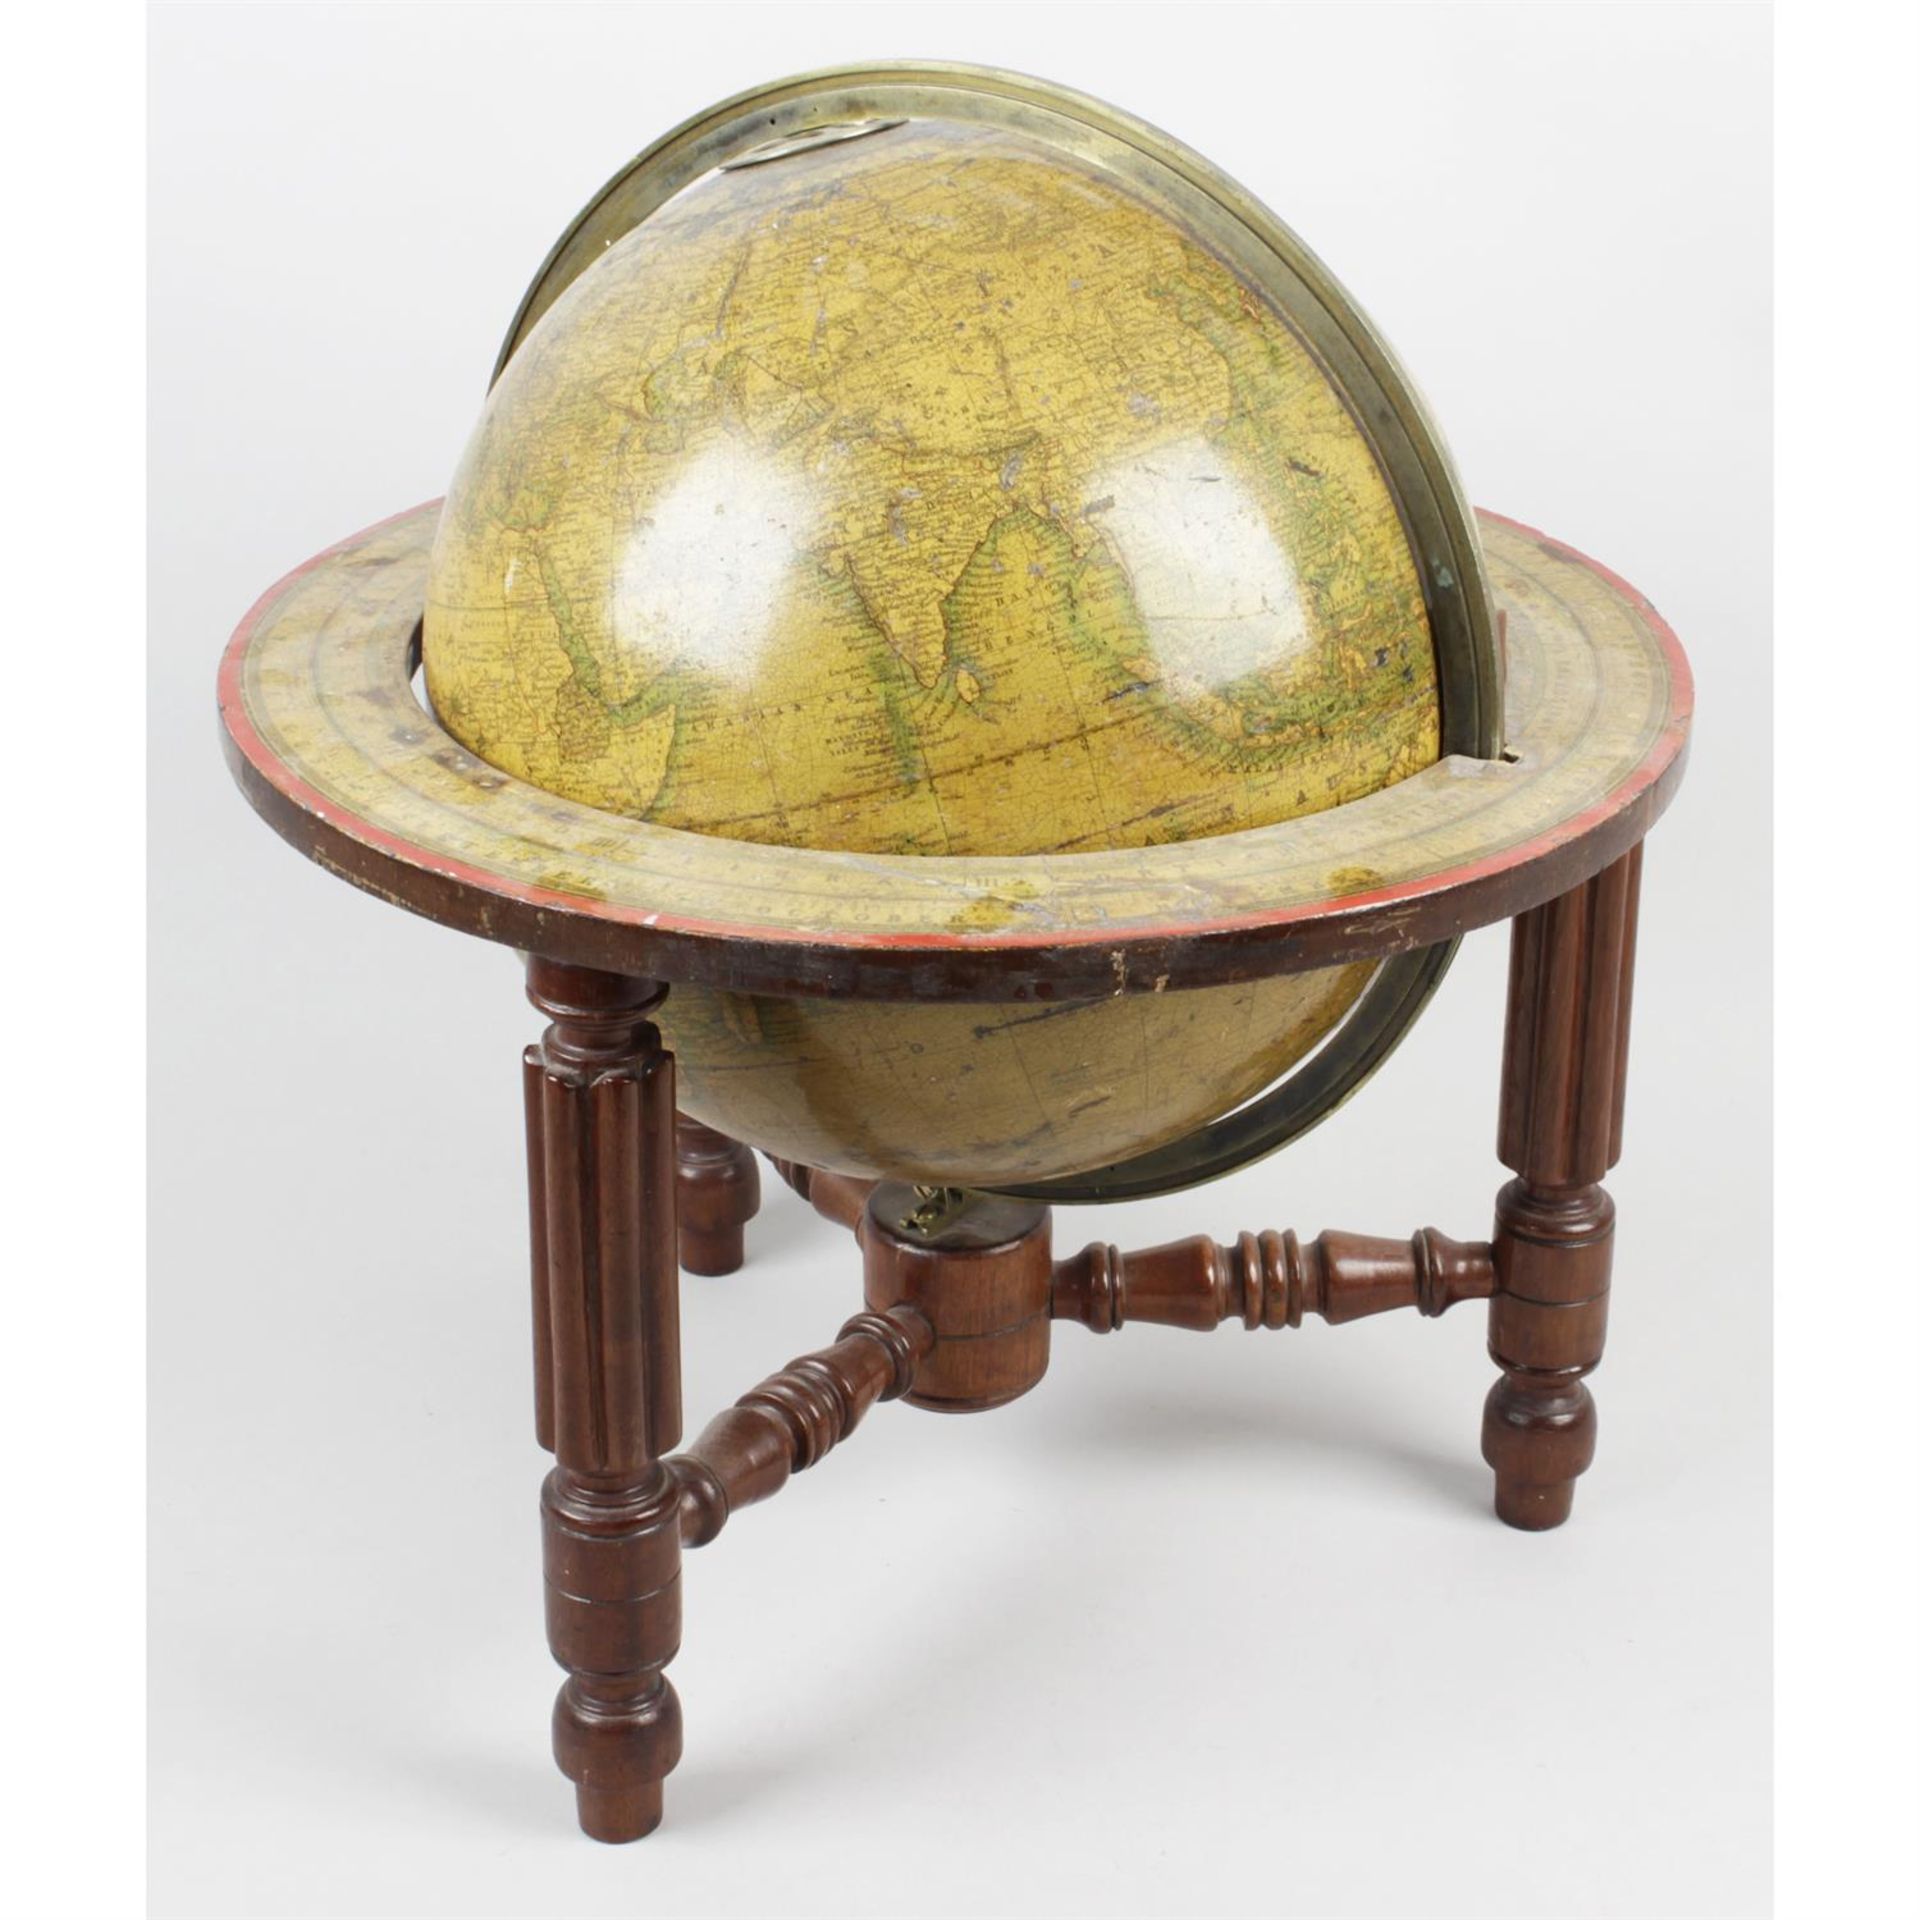 A 19th century Malbys Terrestrial library or desk globe.